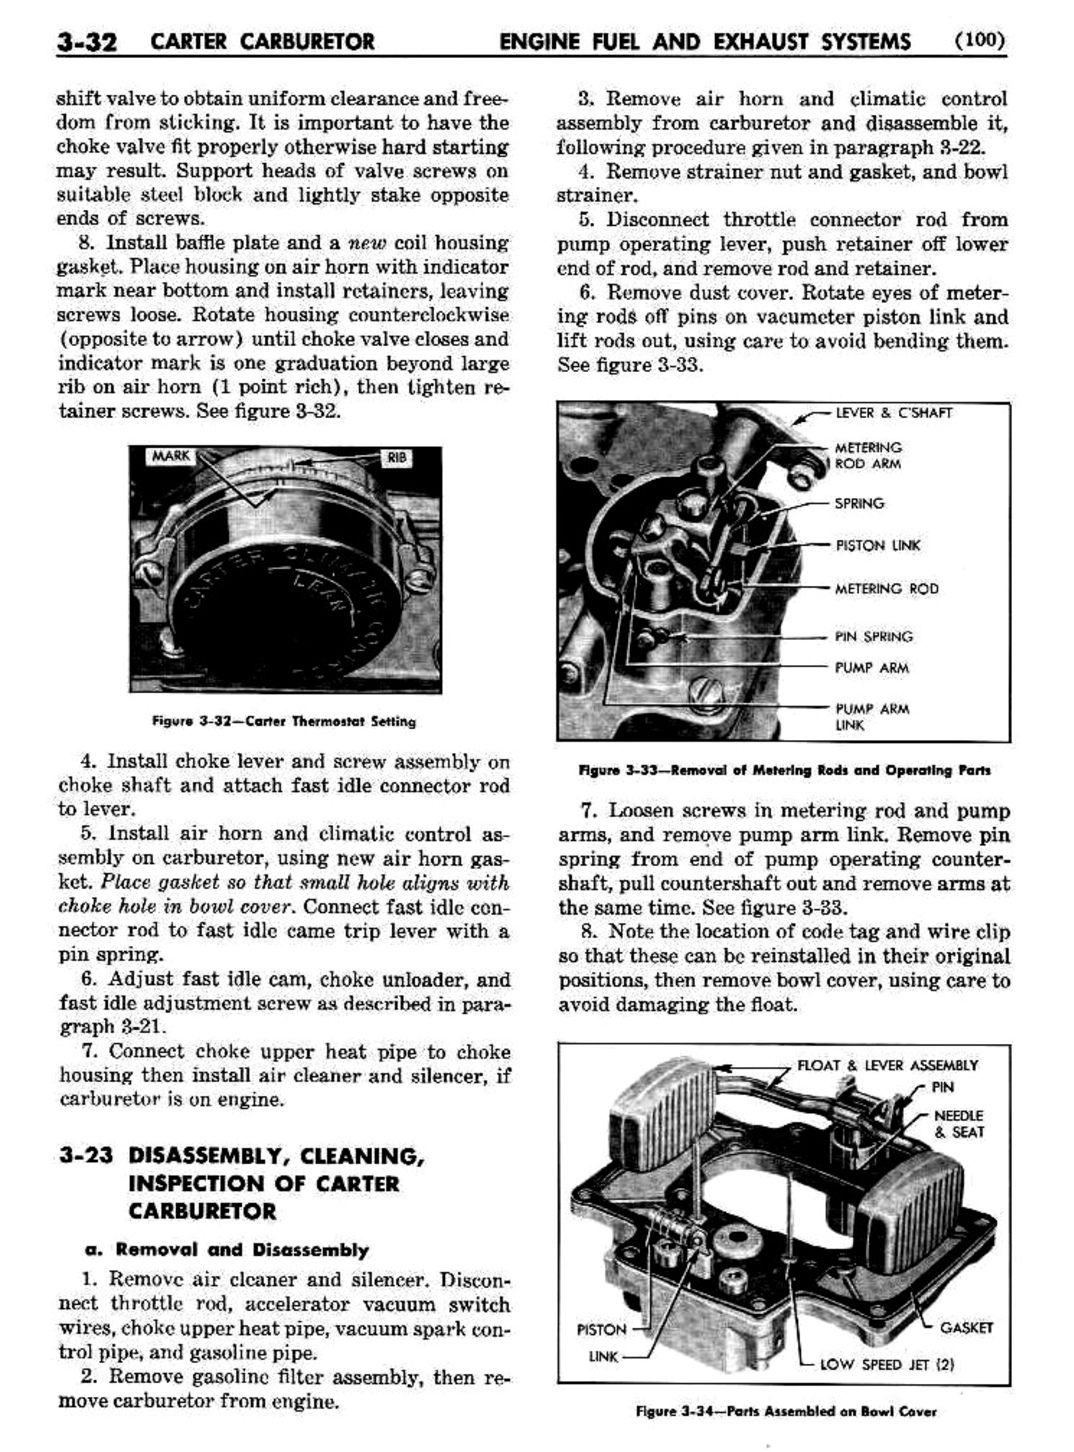 n_04 1951 Buick Shop Manual - Engine Fuel & Exhaust-032-032.jpg